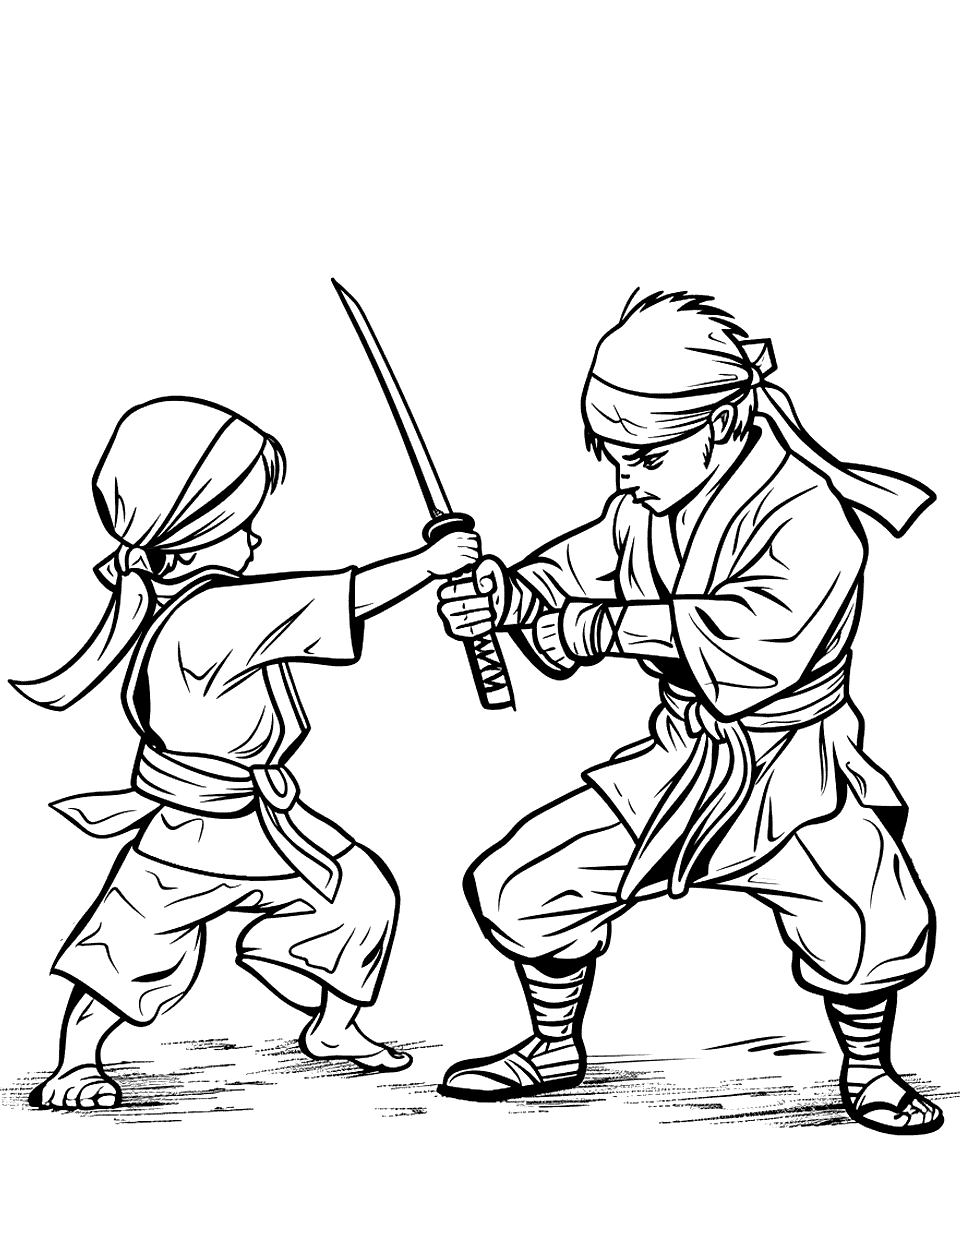 Sensei Teaching a Move Ninja Coloring Page - A sensei demonstrating a martial arts move to a young ninja.